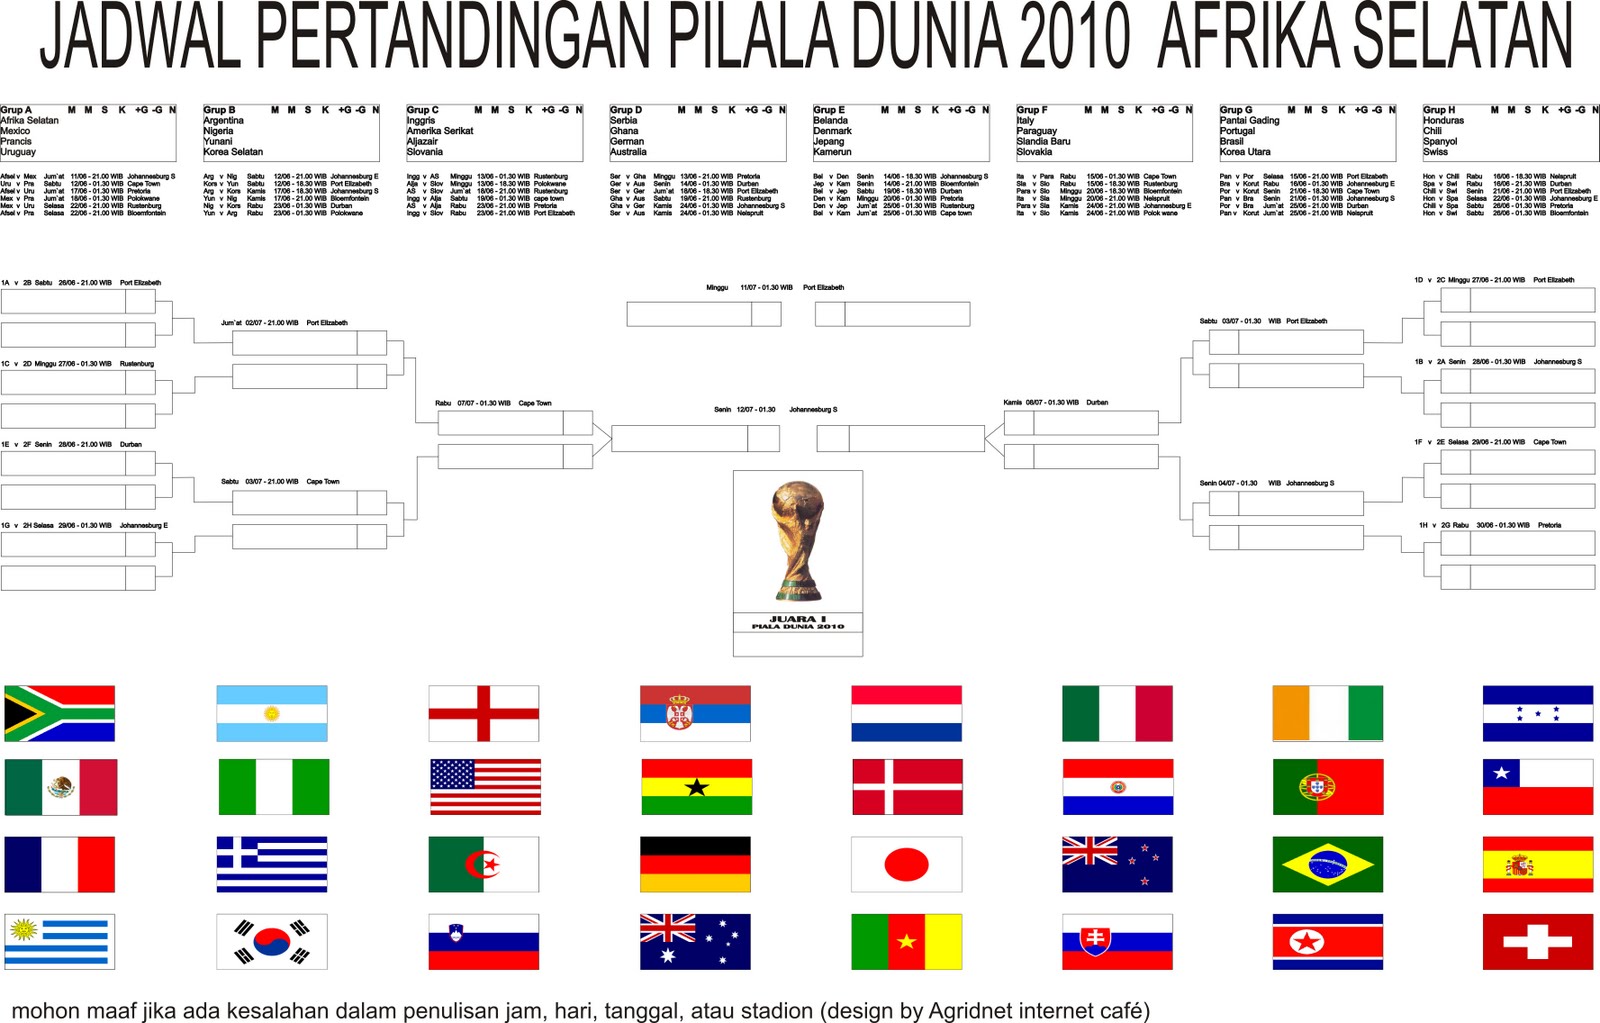 Agridnet Jadwal Pertandingan Piala Dunia 2010 Afrika Selatan